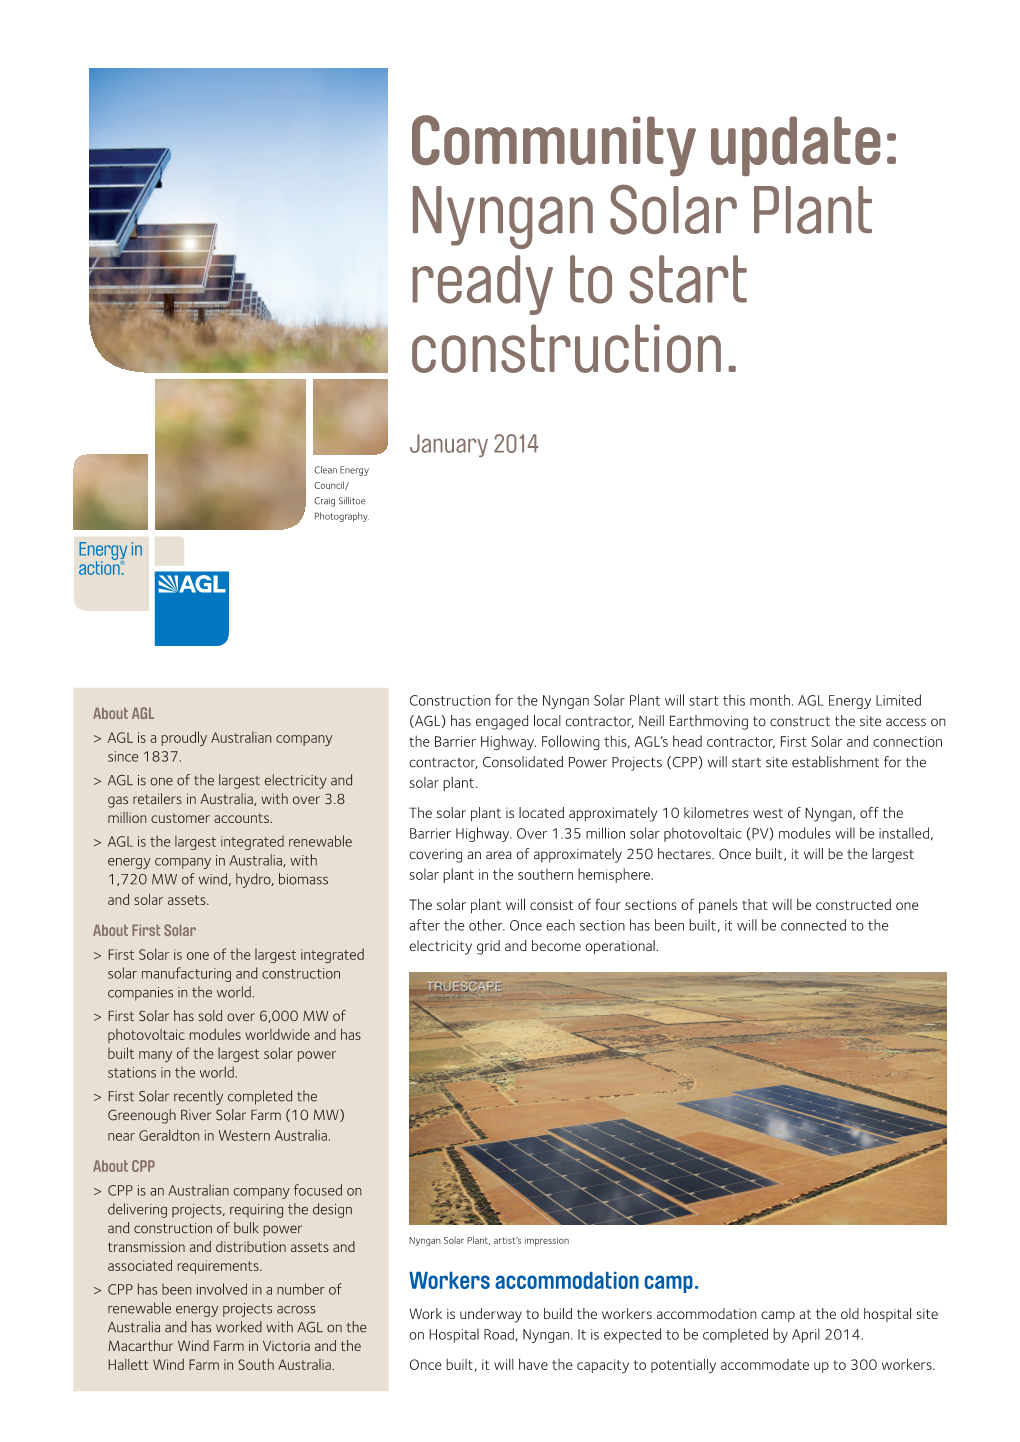 Community Update: Nyngan Solar Plant Ready to Start Construction